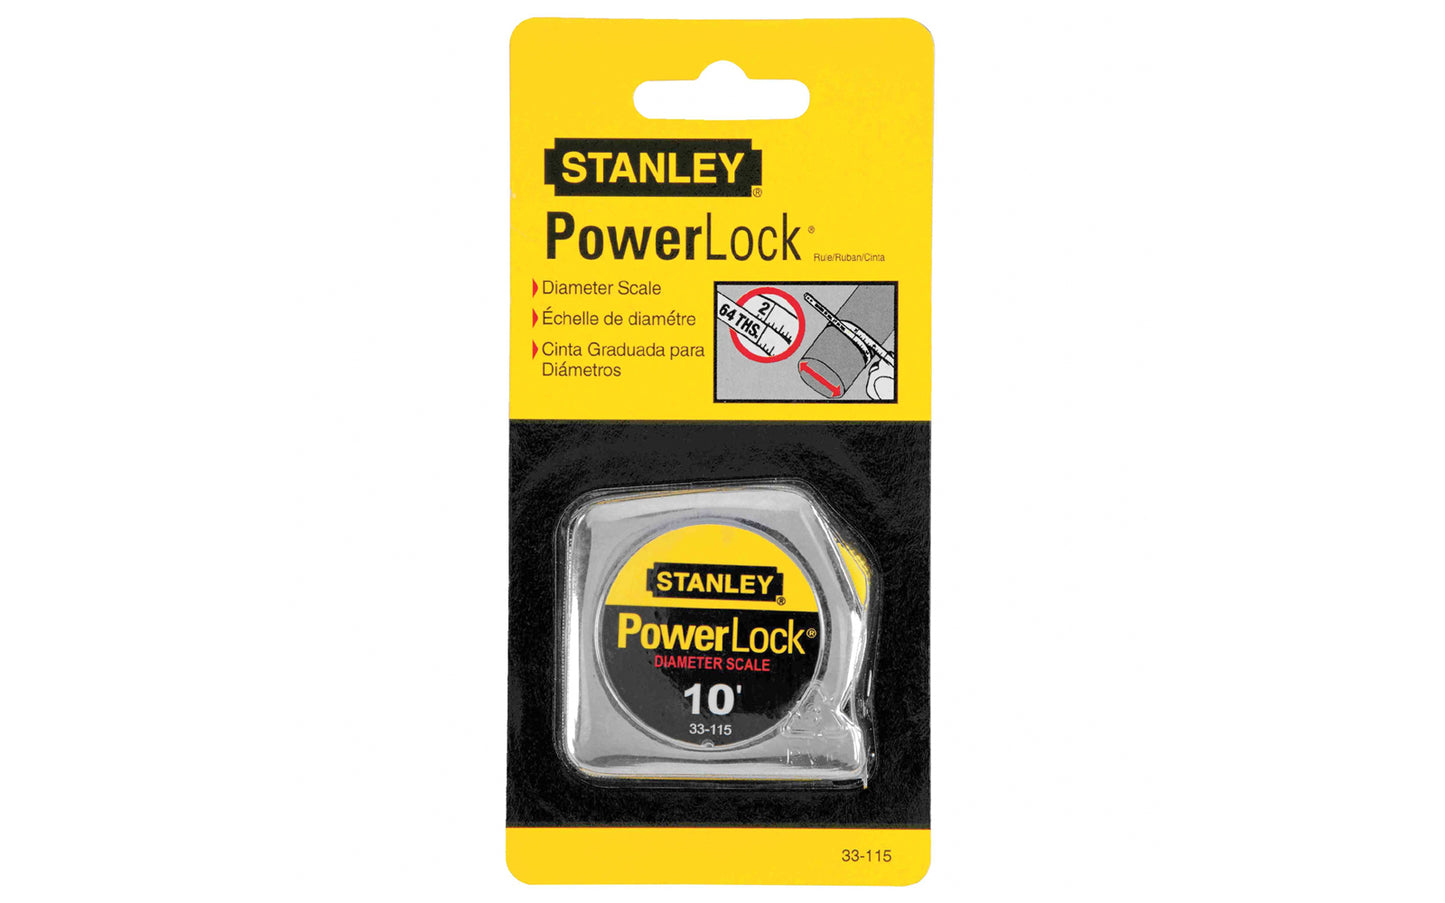 Stanley Powerlock 10' Tape Measure ~ Diameter Scale ~ 33-115